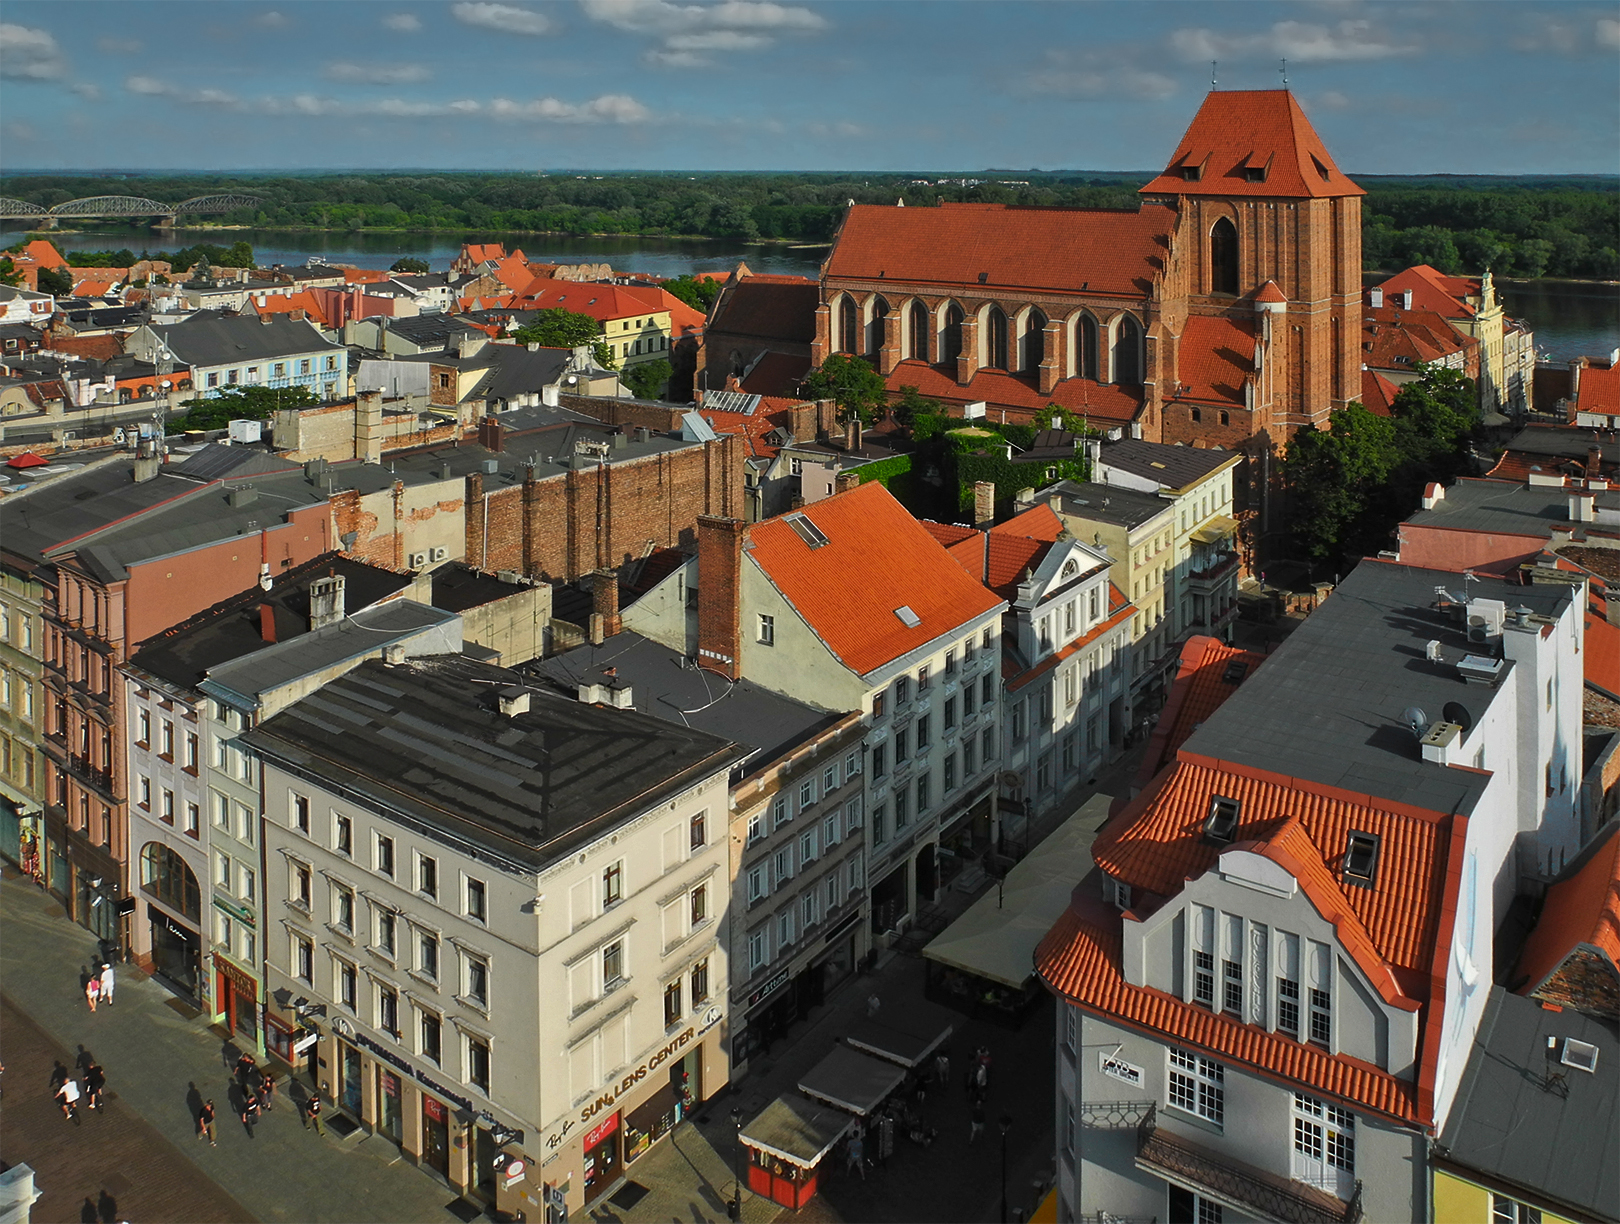 Medieval Town of Toruń - Wikipedia